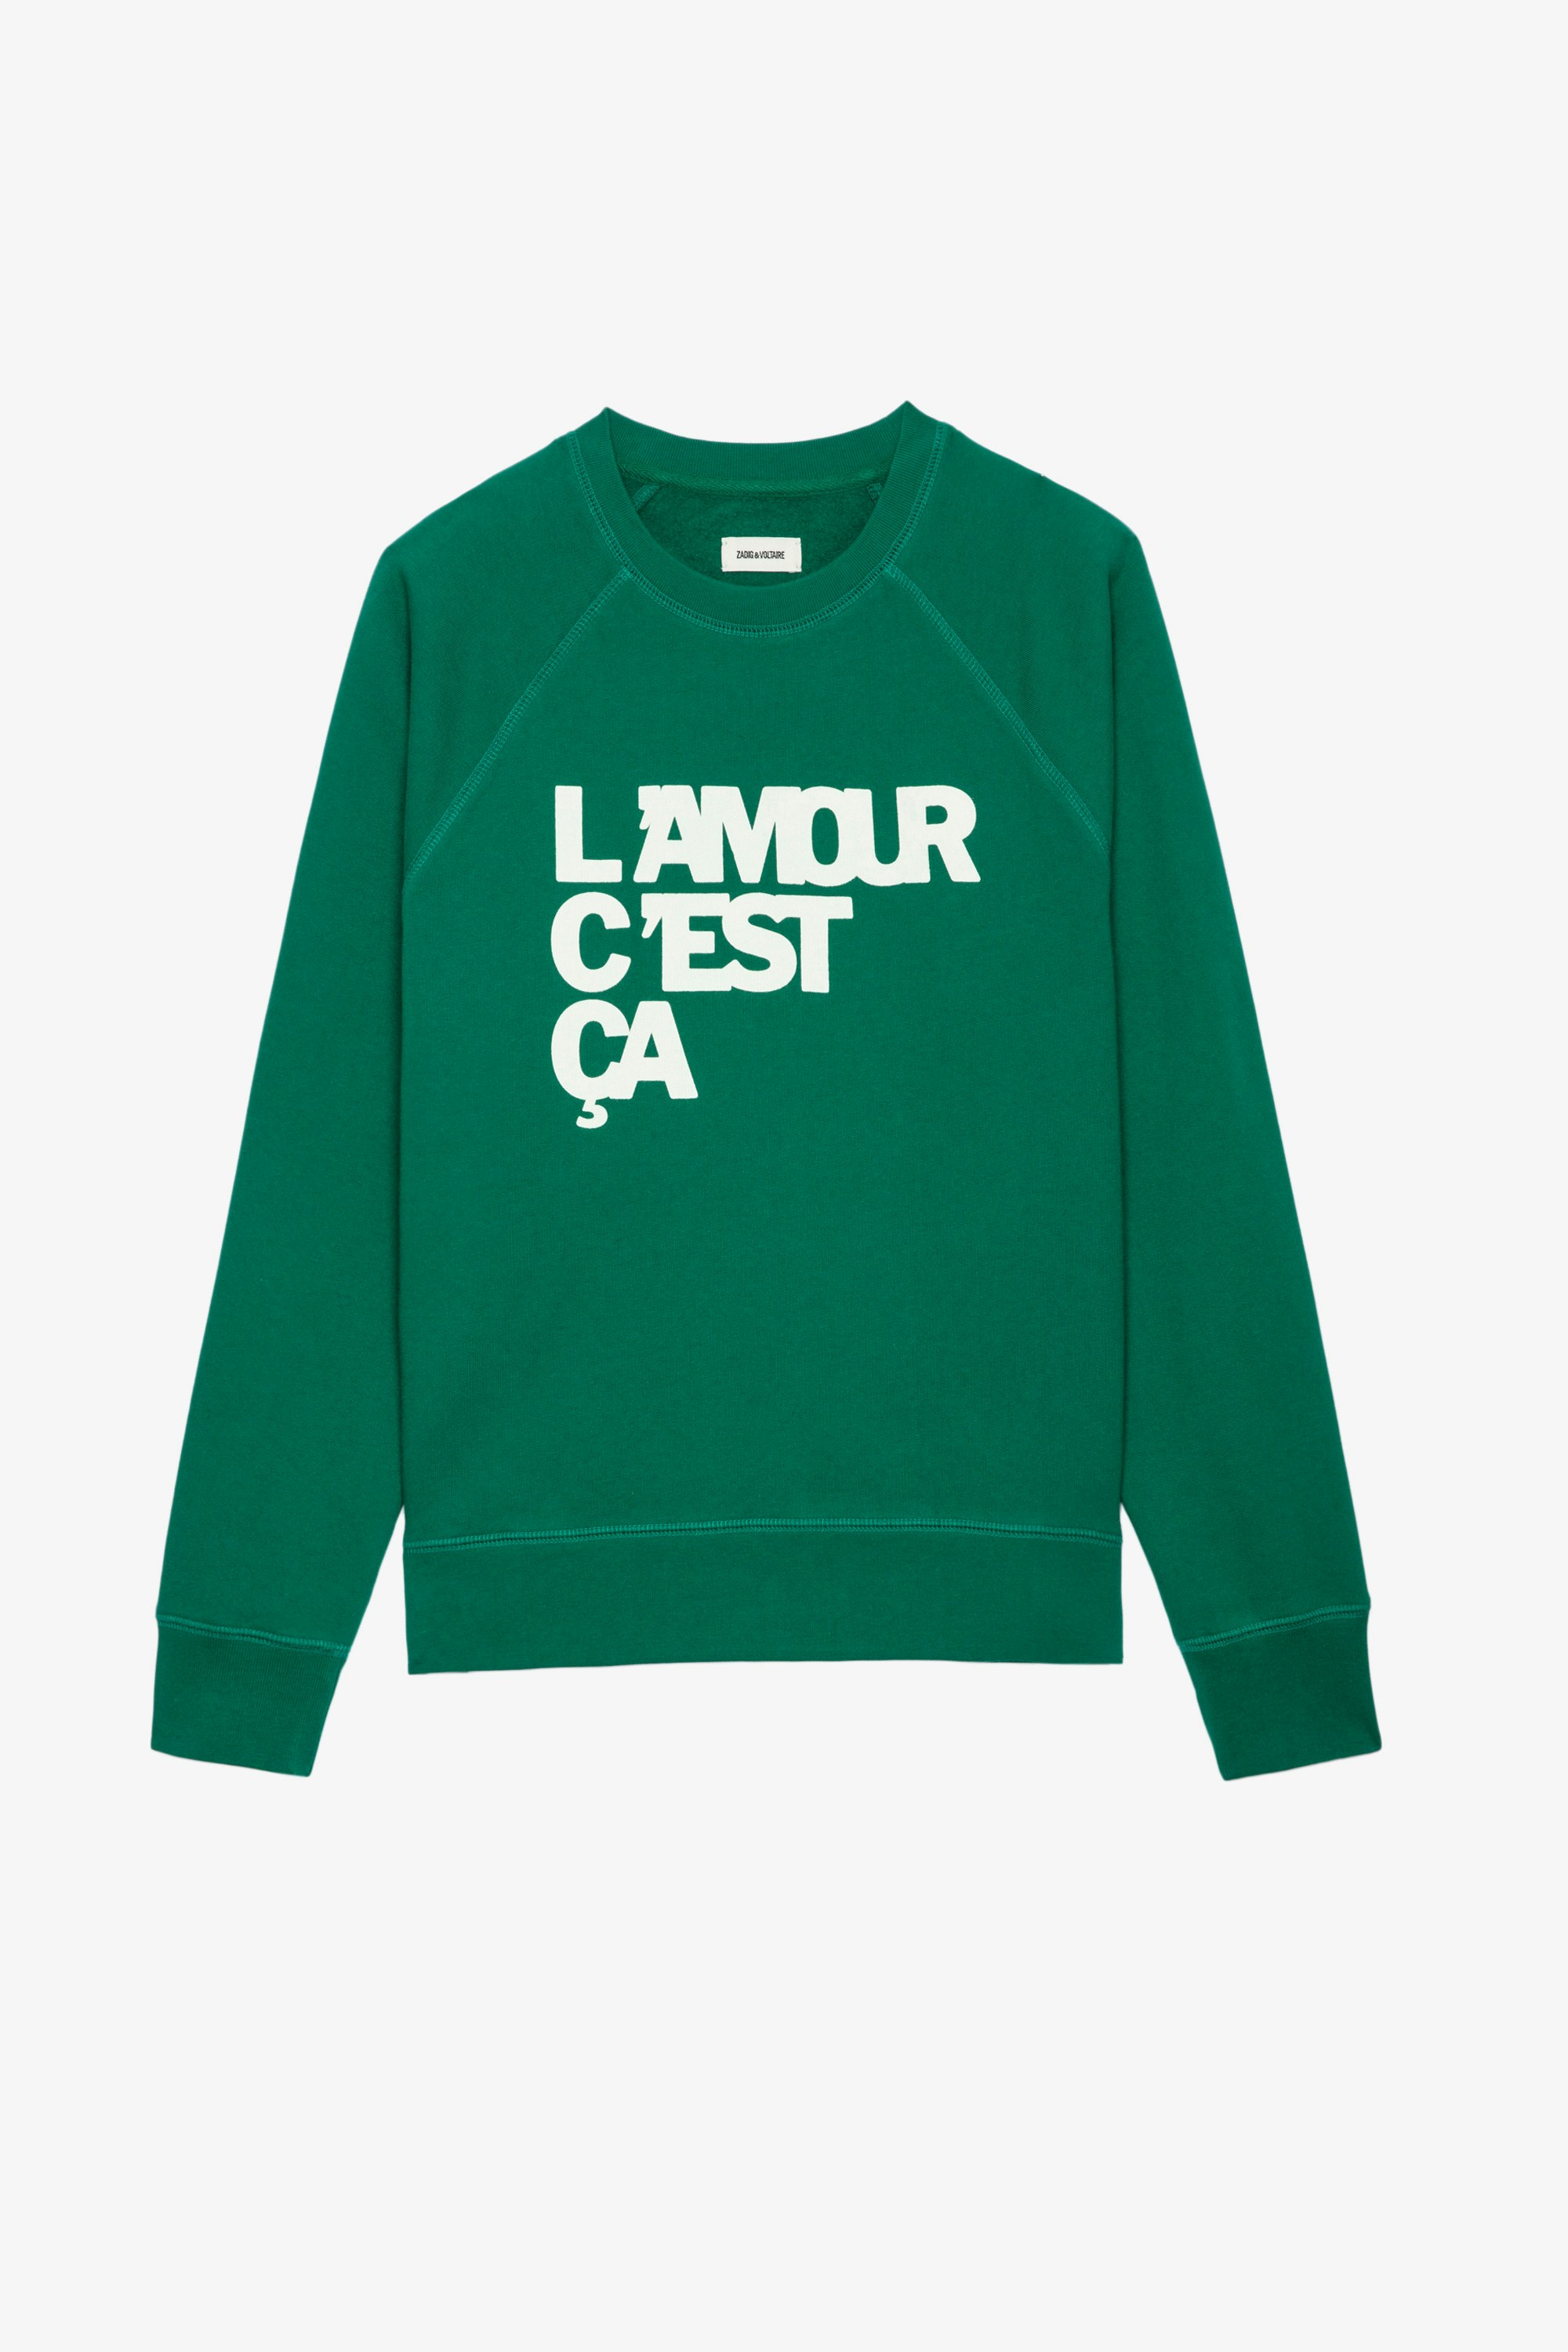 Upper L'amour c'est ça Sweatshirt Women’s green cotton sweatshirt with “L'amour c'est ça” slogan